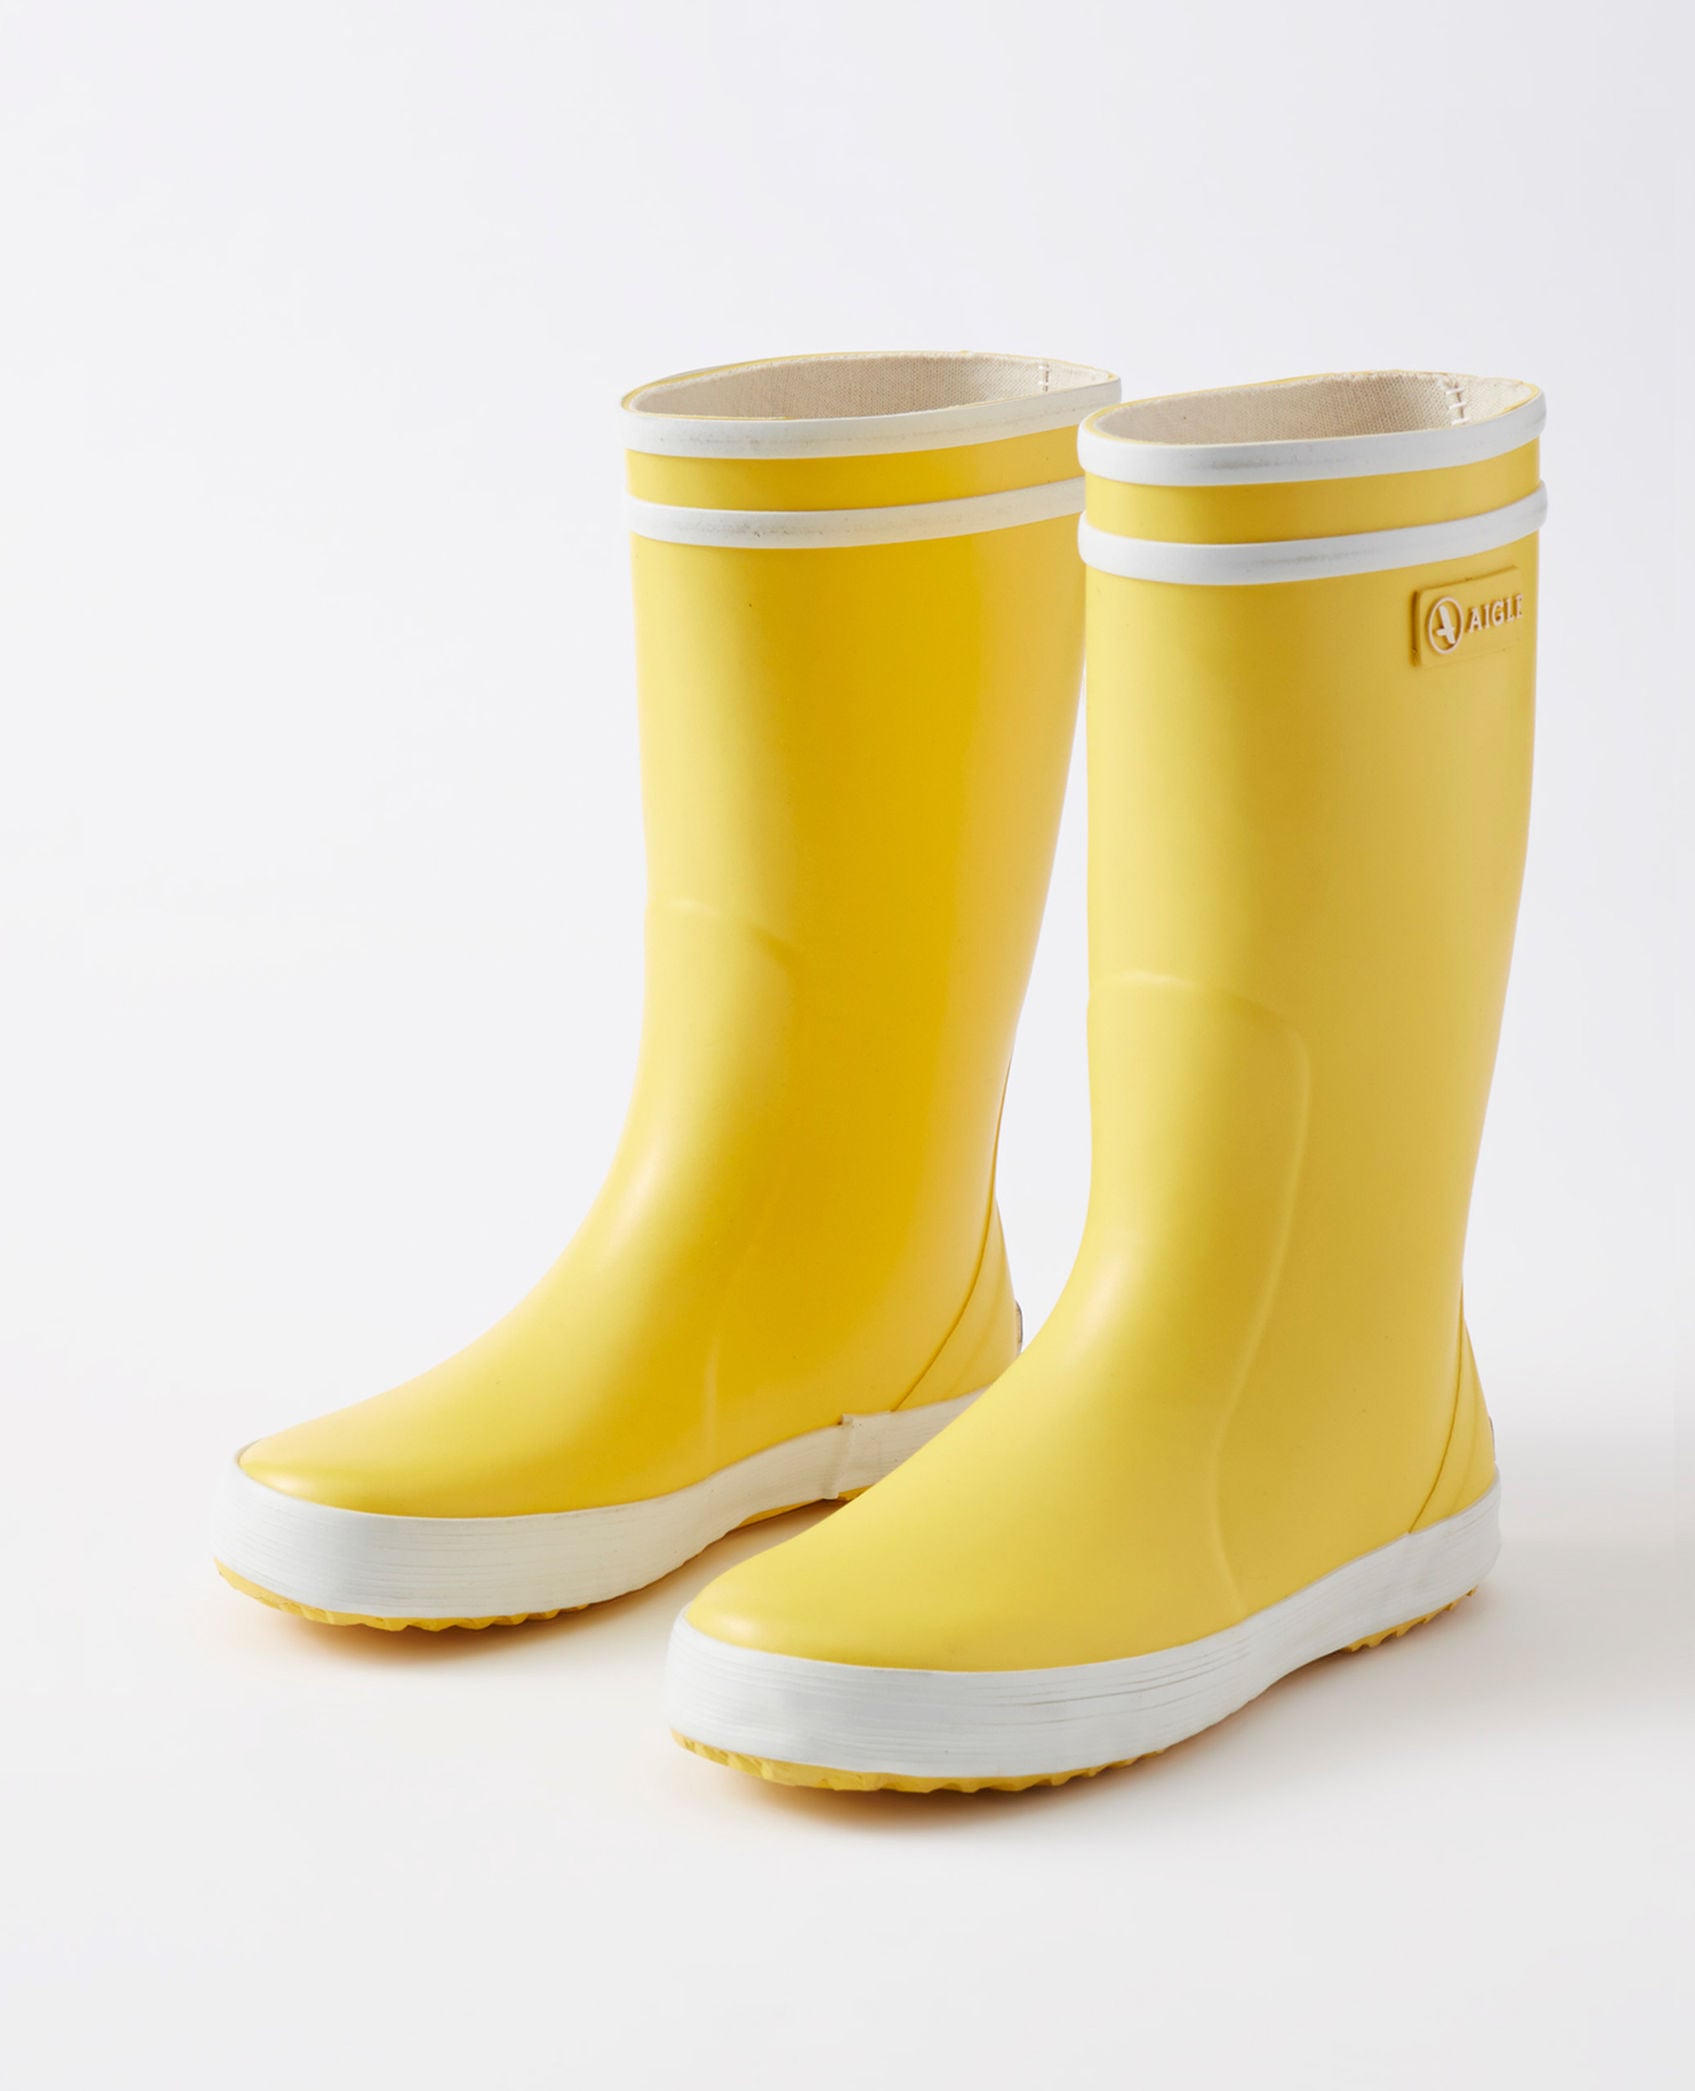 cute kids rain boots